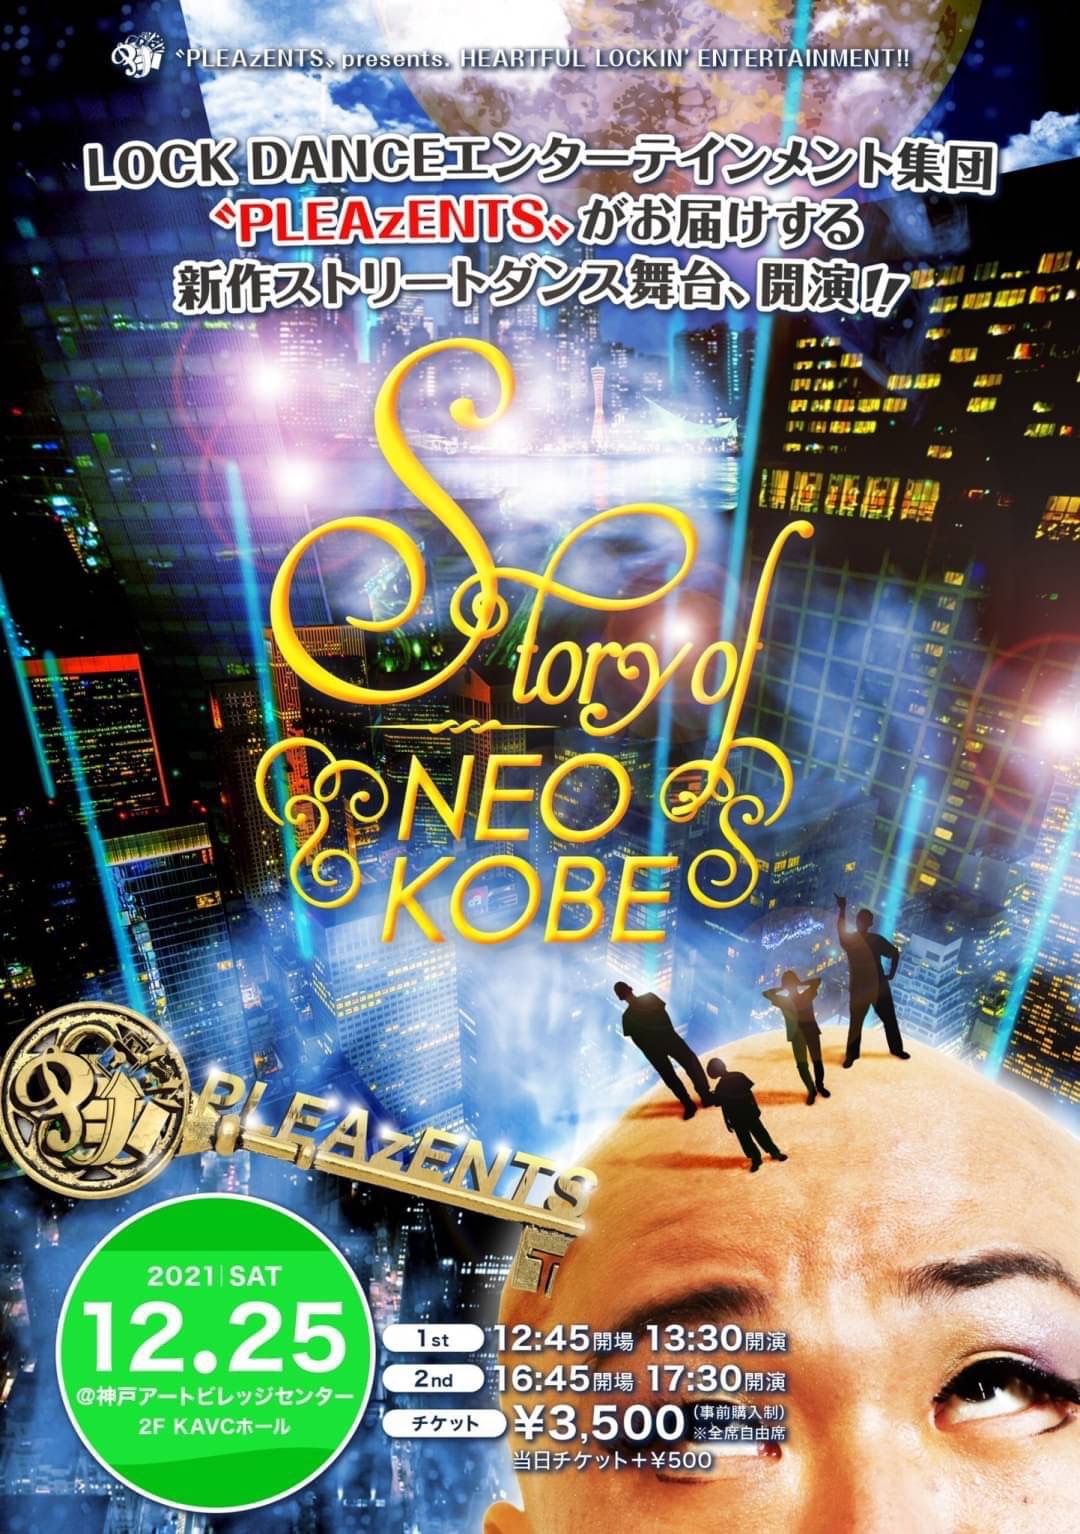 "Story of NEO KOBE" presented by PLEAzENTS